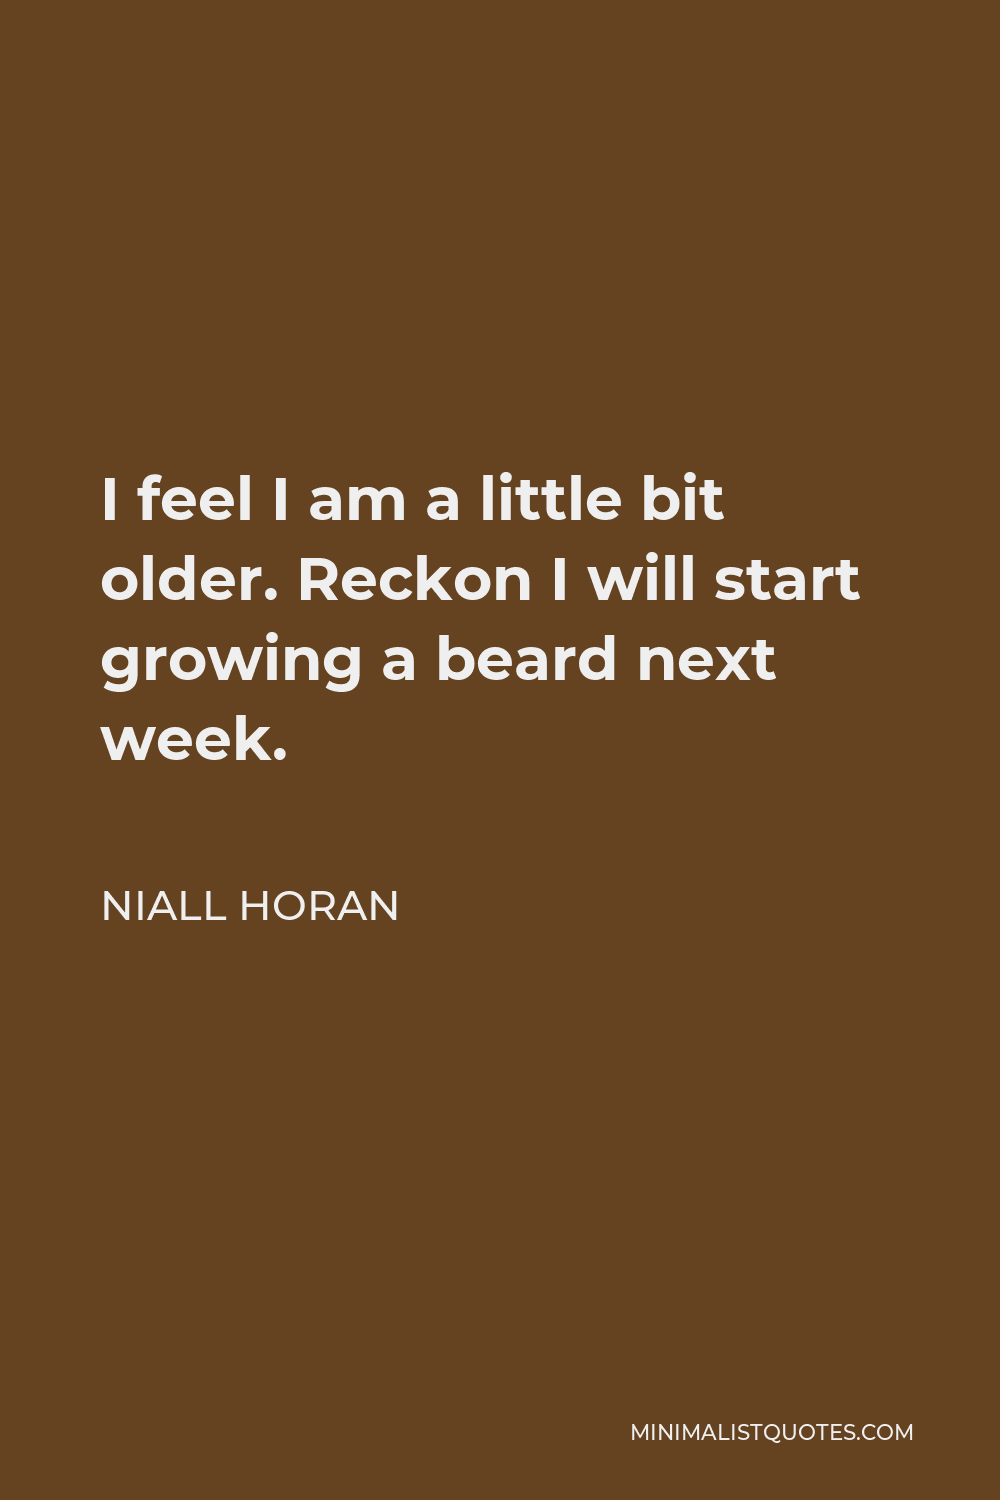 Niall Horan Quote - I feel I am a little bit older. Reckon I will start growing a beard next week.